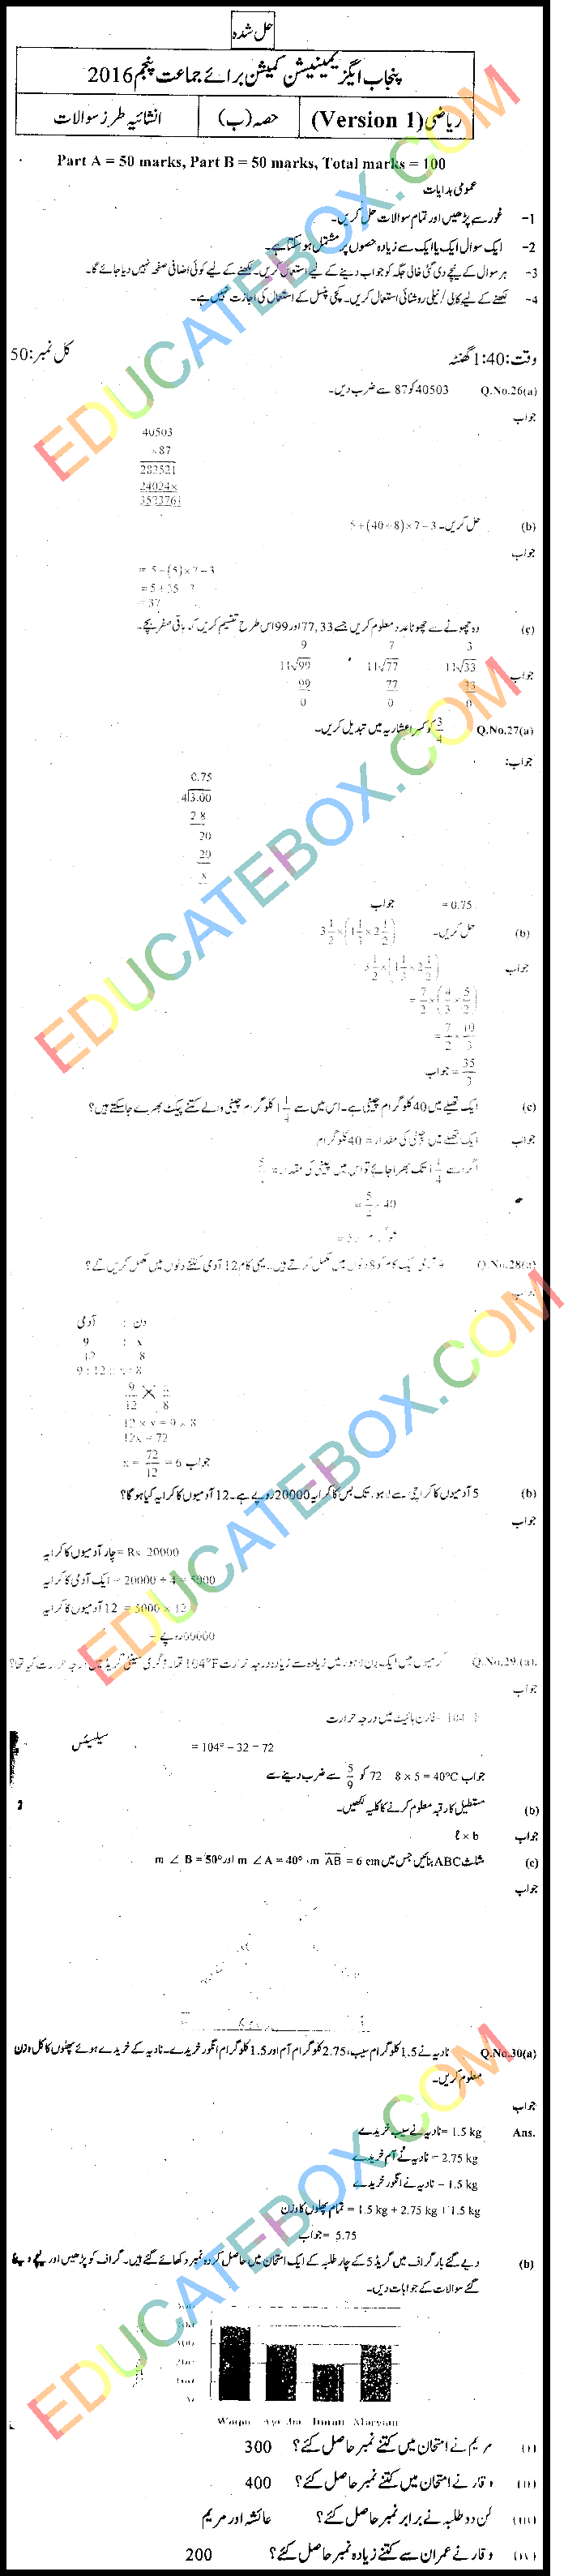 Past Paper Maths (Urdu Medium) 5th Class 2016 Punjab Board (PEC) Solved Paper Subjective Type اپٹو ڈیٹ پیپر ریاضی اردو میڈیم برائے جماعت پنجم 2016 پنجاب بورڈ سولڈ پیپر سبجیکٹیو ٹائپ